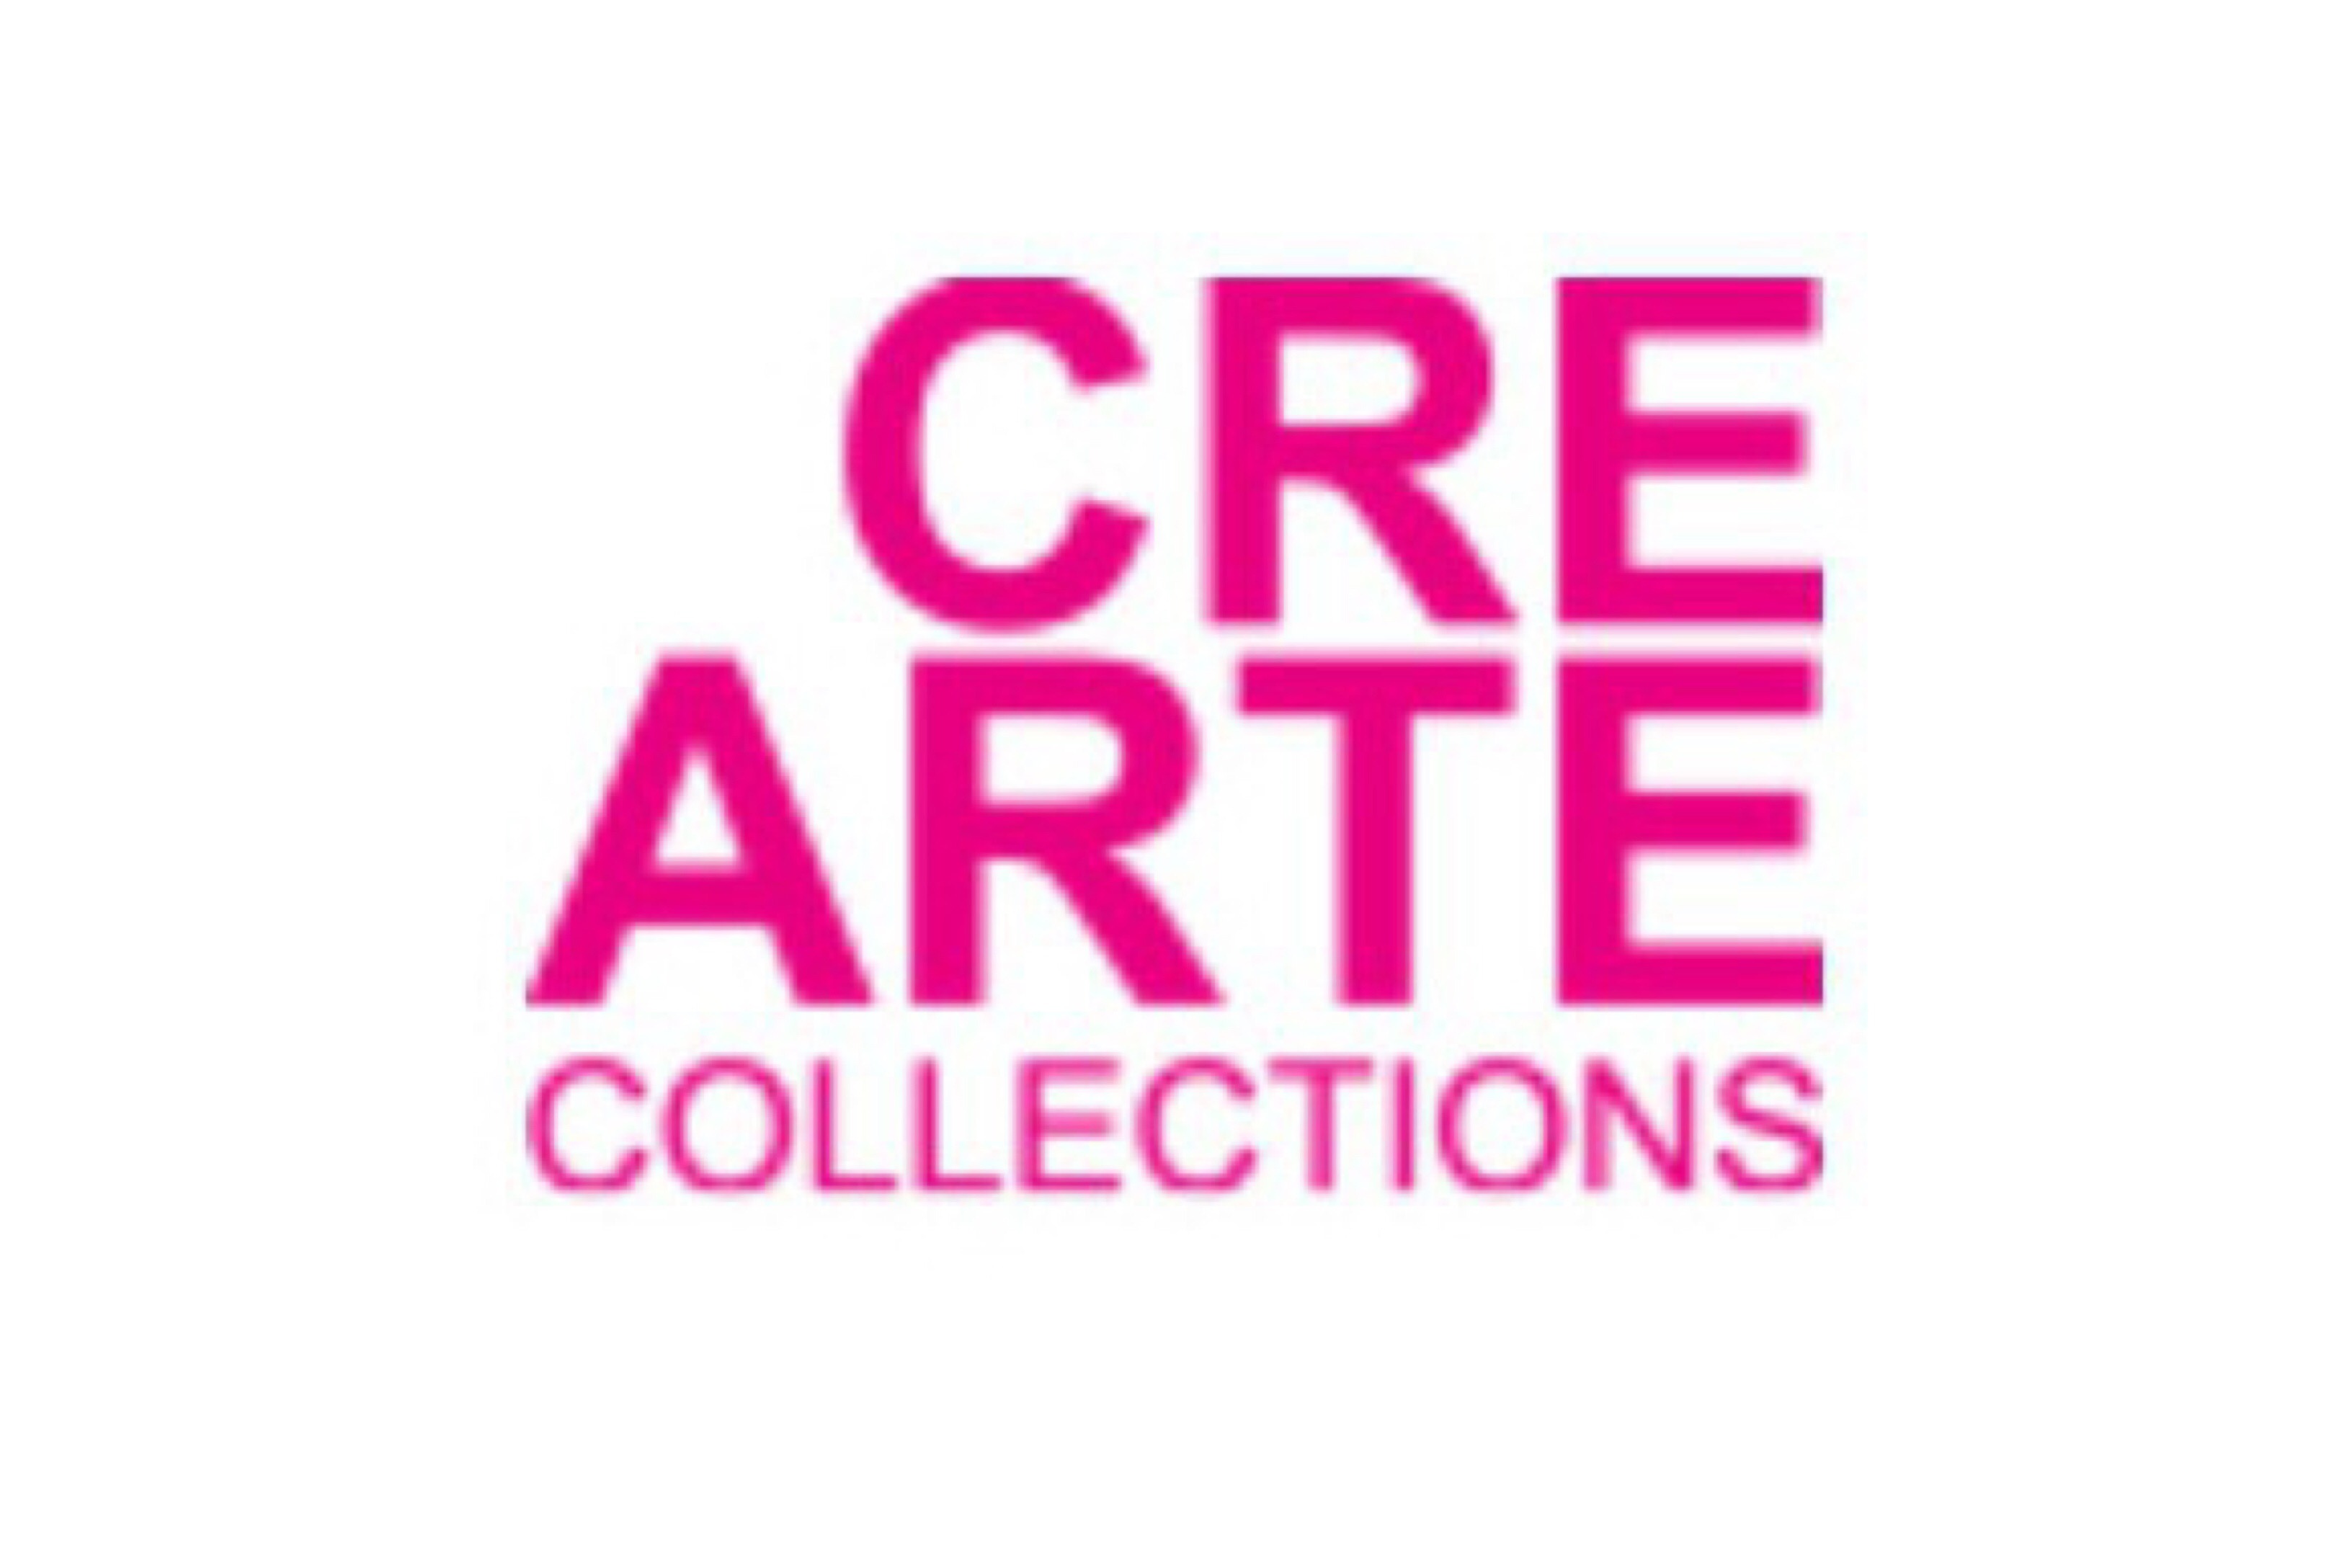 Crearte Collections